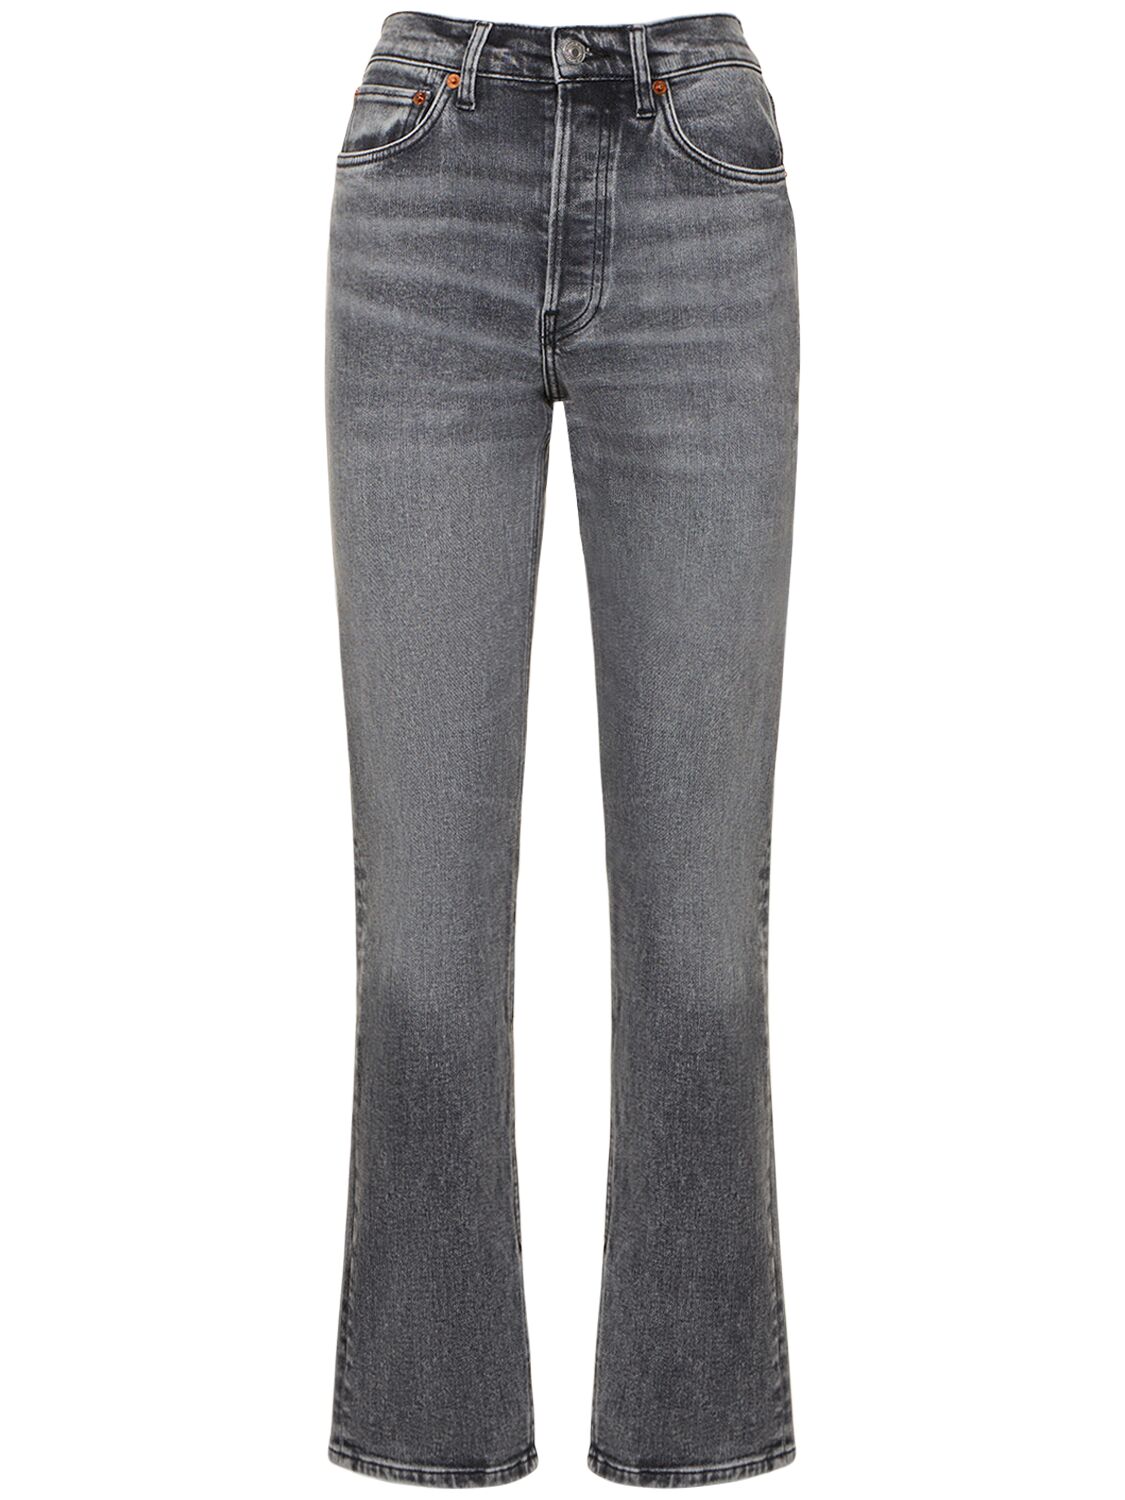 70s Skinny Boot Cotton Denim Jeans